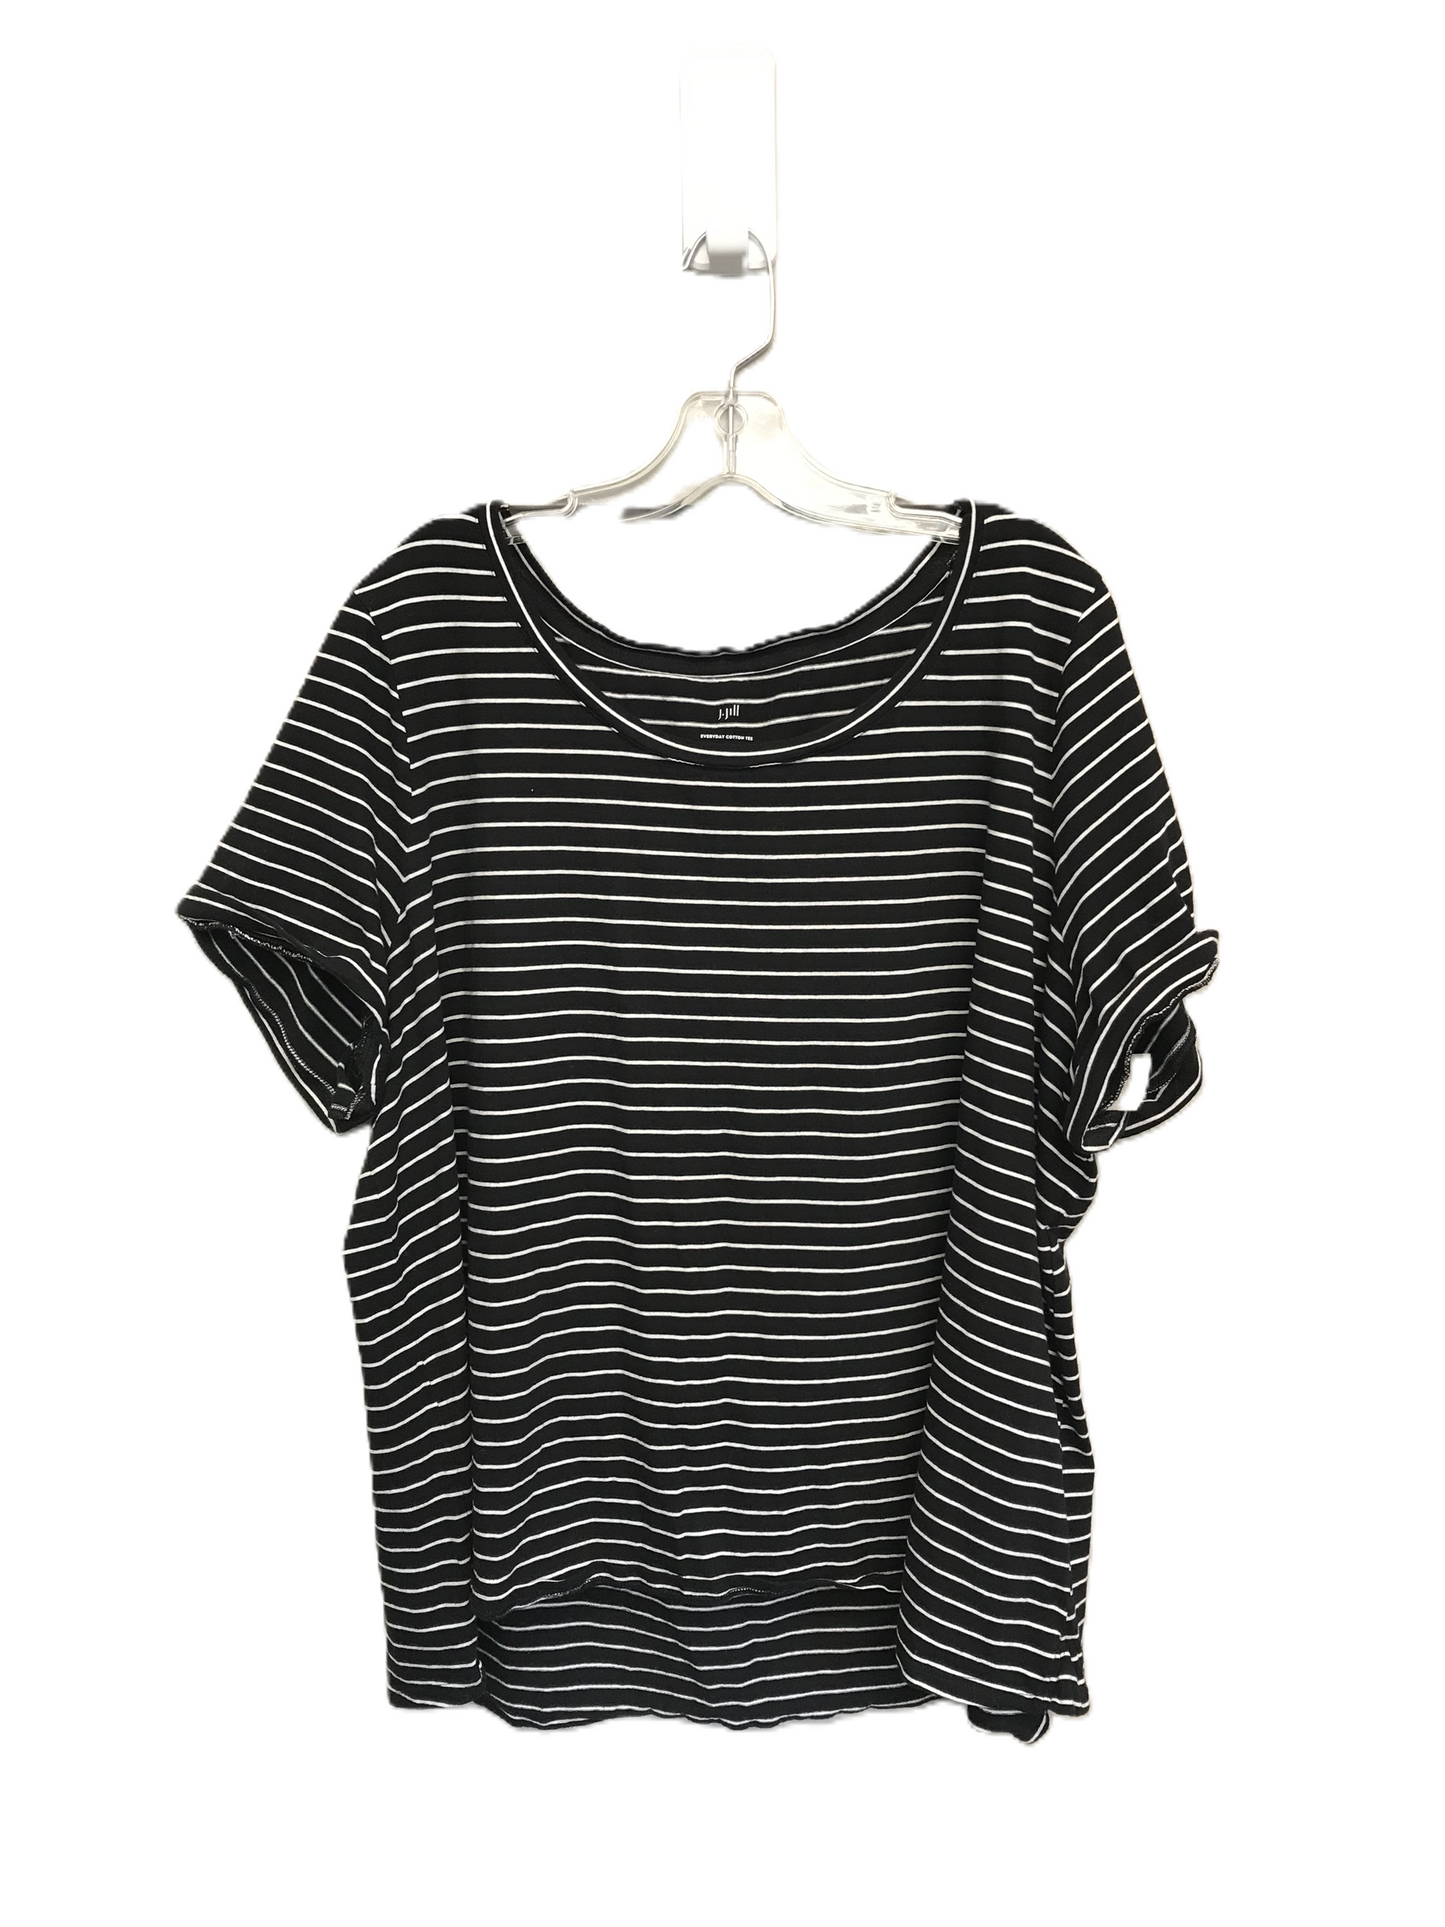 Striped Pattern Top Short Sleeve Basic By J. Jill, Size: 3x